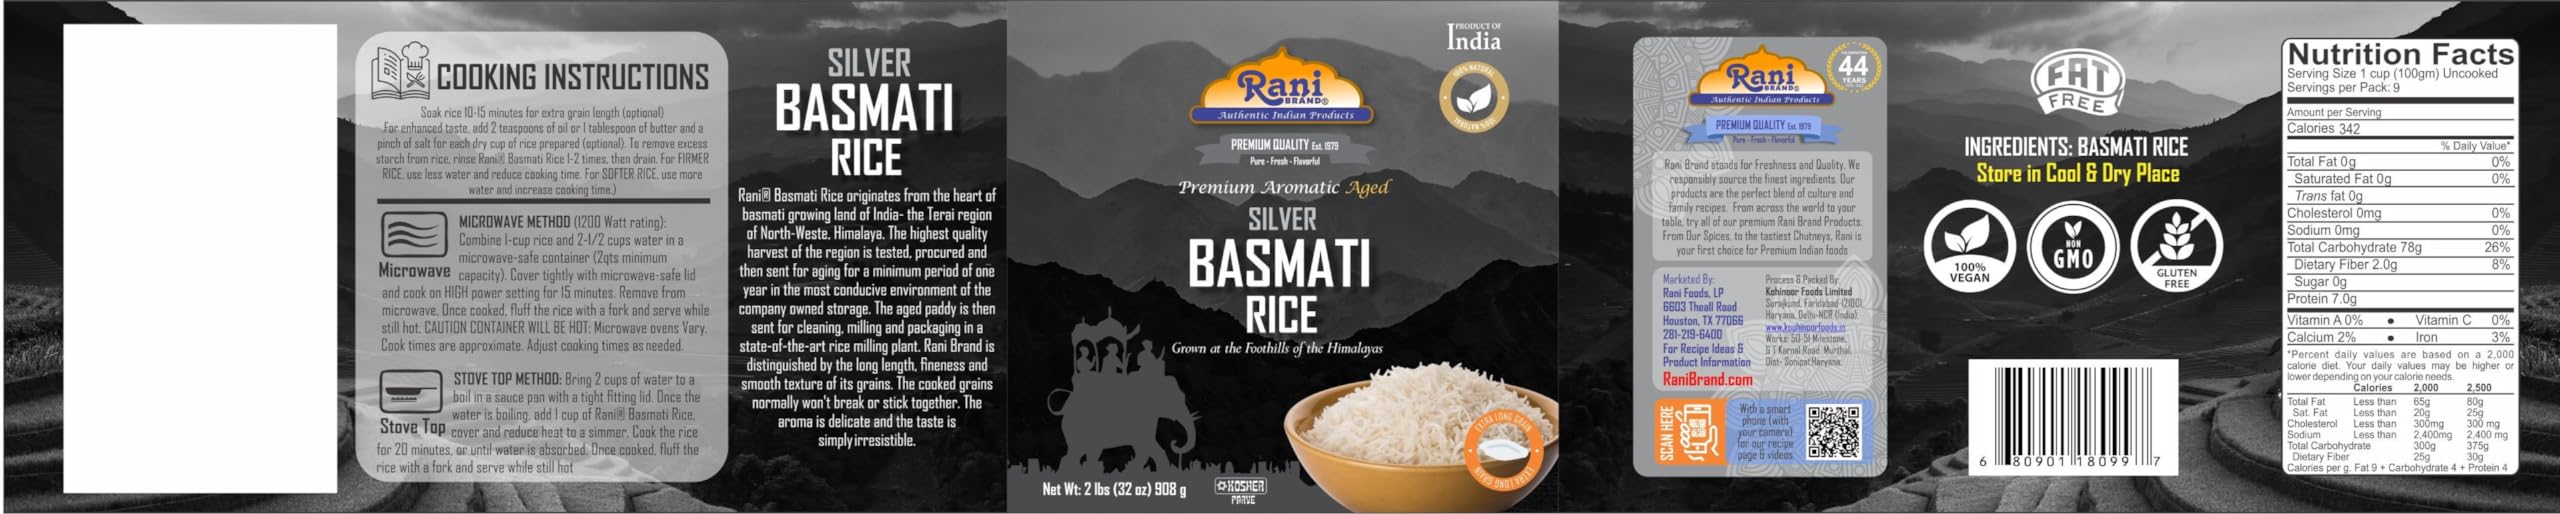 Rani Silver White Basmati Rice Extra Long Aged 32oz (2lbs) 908g PET Jar ~ All Natural | Gluten Friendly | Vegan | Indian Origin | Kosher | Export Quality